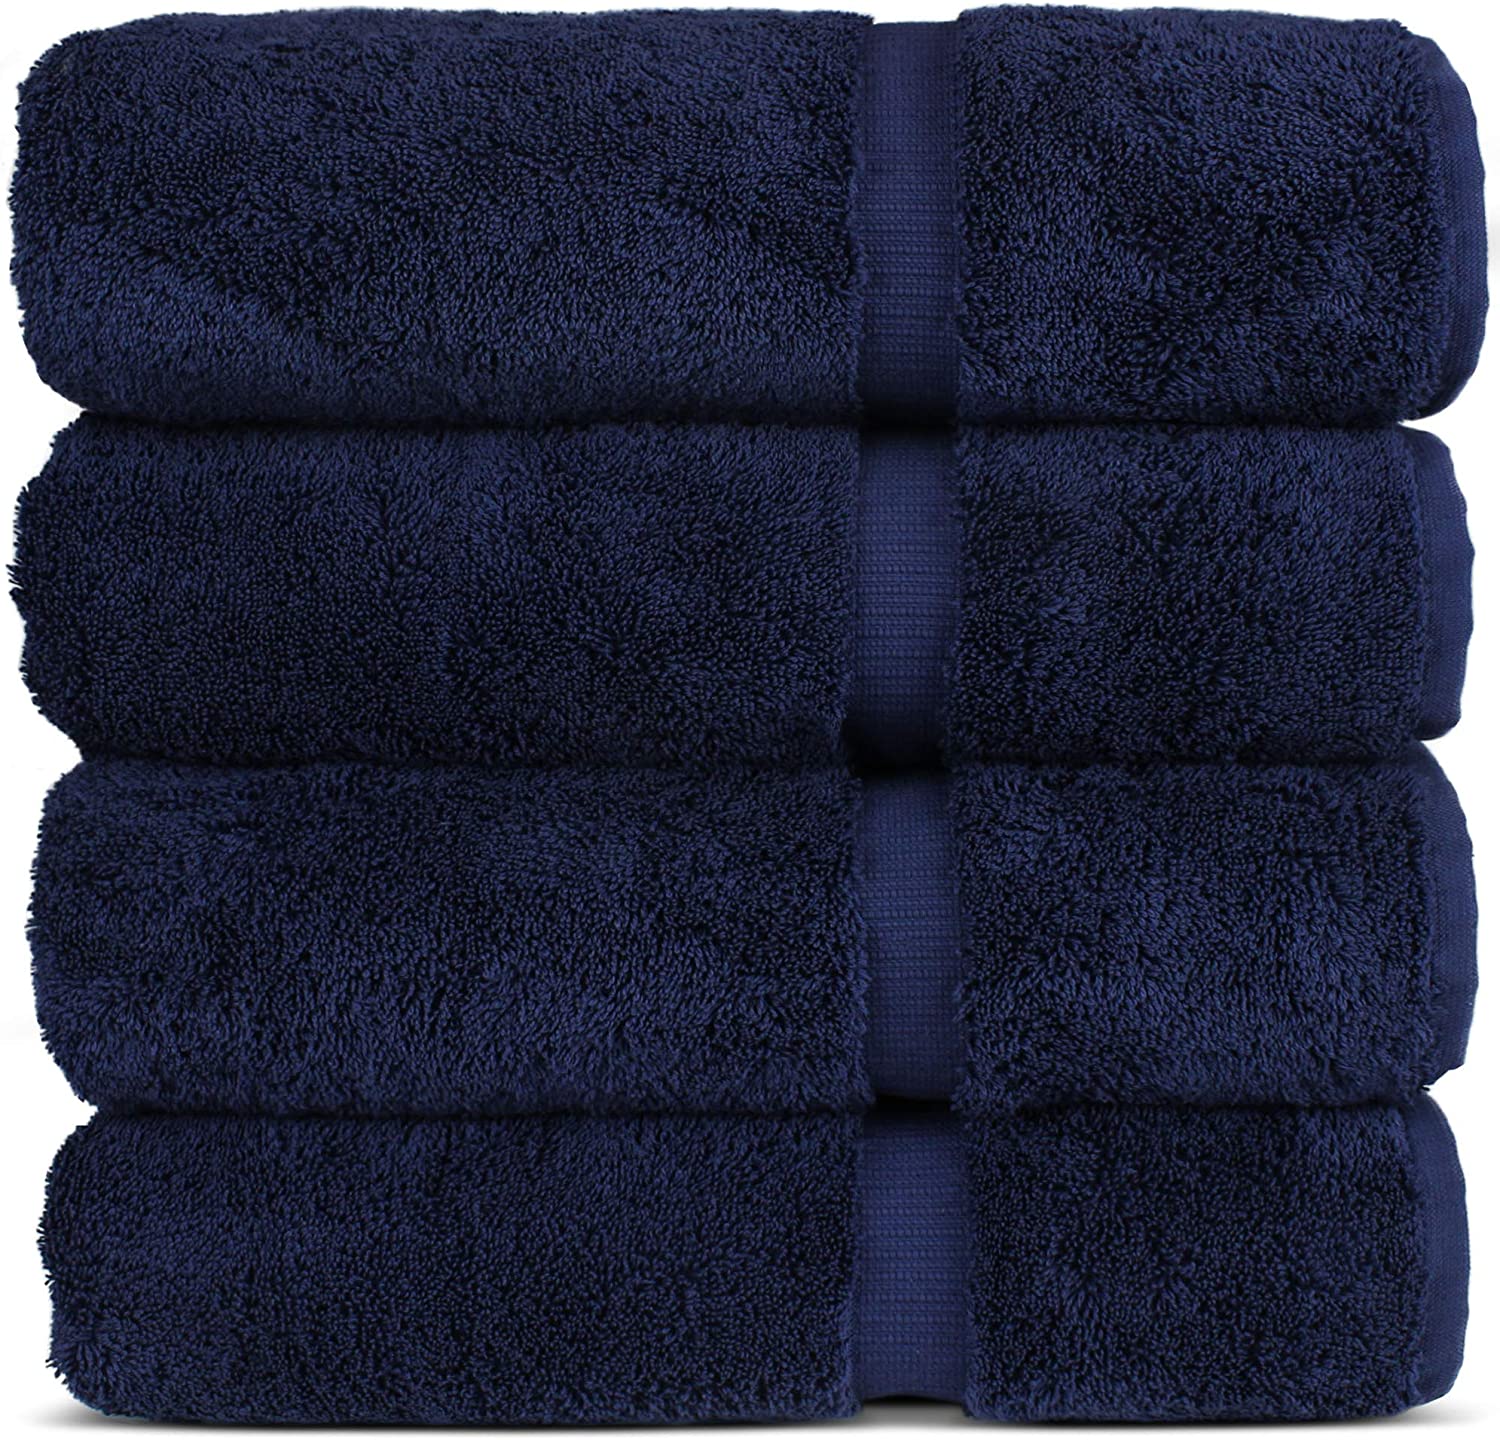 Chakir Turkish Linens Eco-Friendly Cotton Bath Towels, 4-Piece